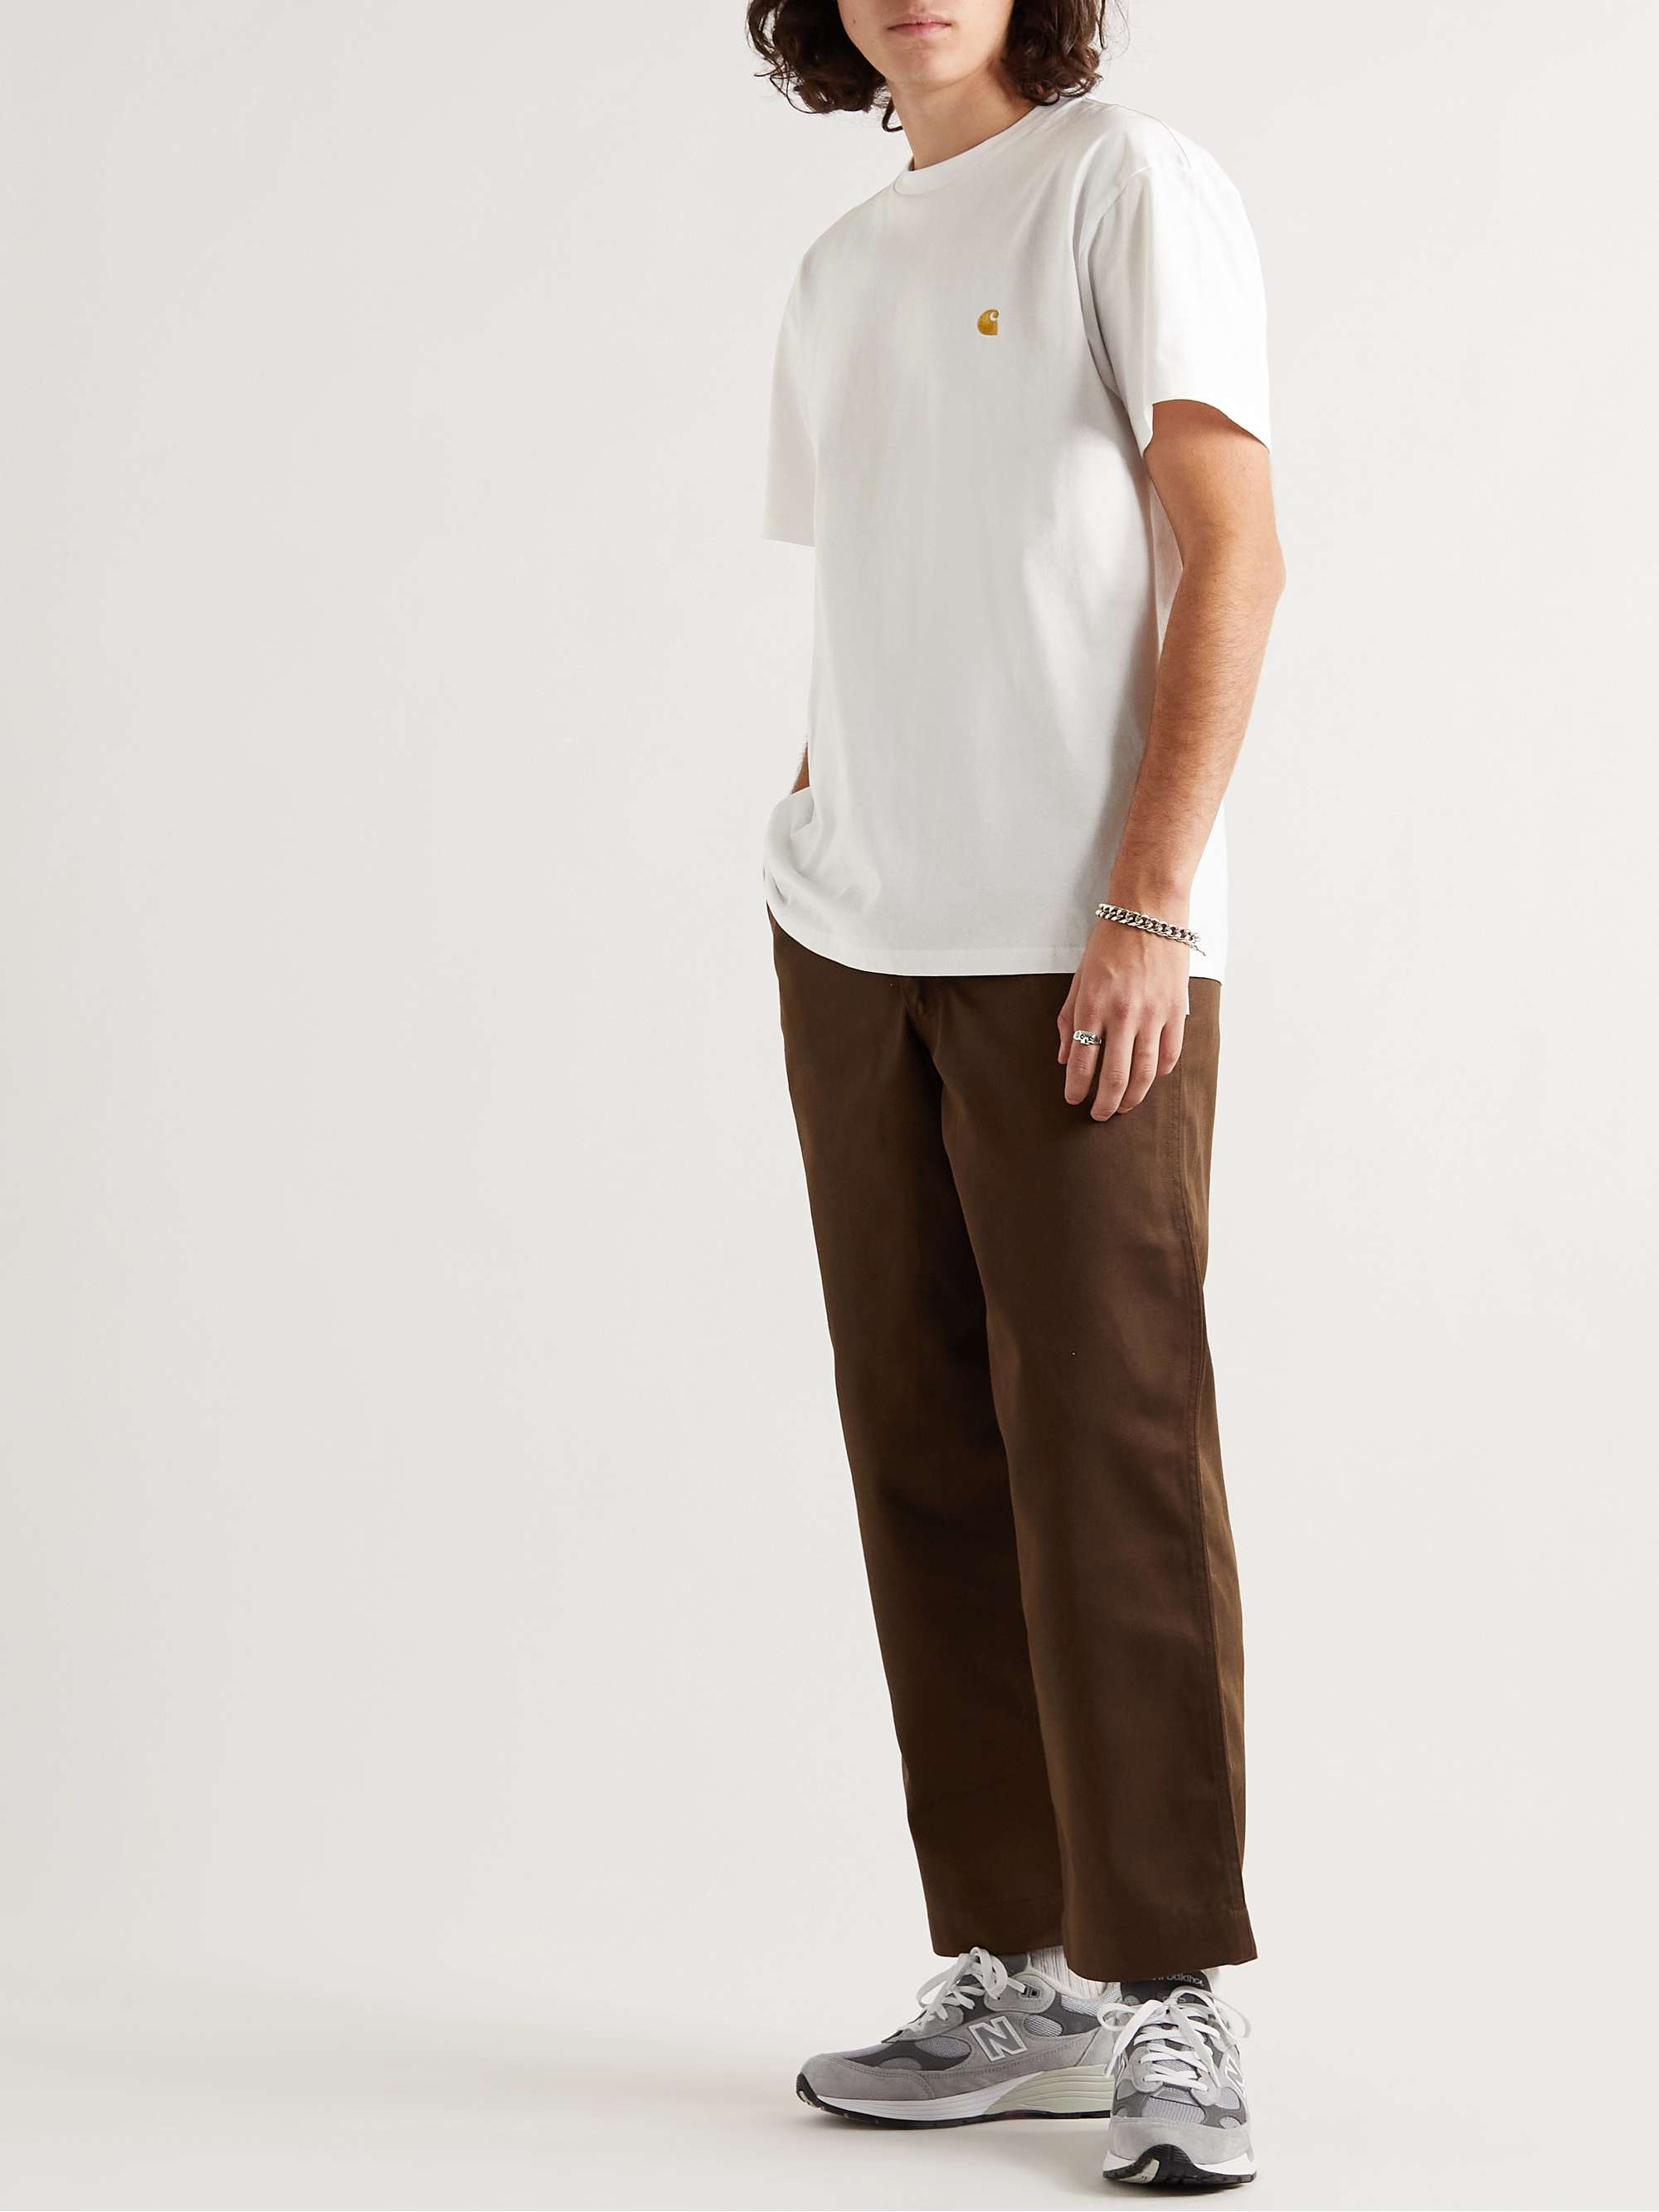 White Logo-Embroidered Cotton-Jersey T-Shirt | CARHARTT WIP | MR PORTER